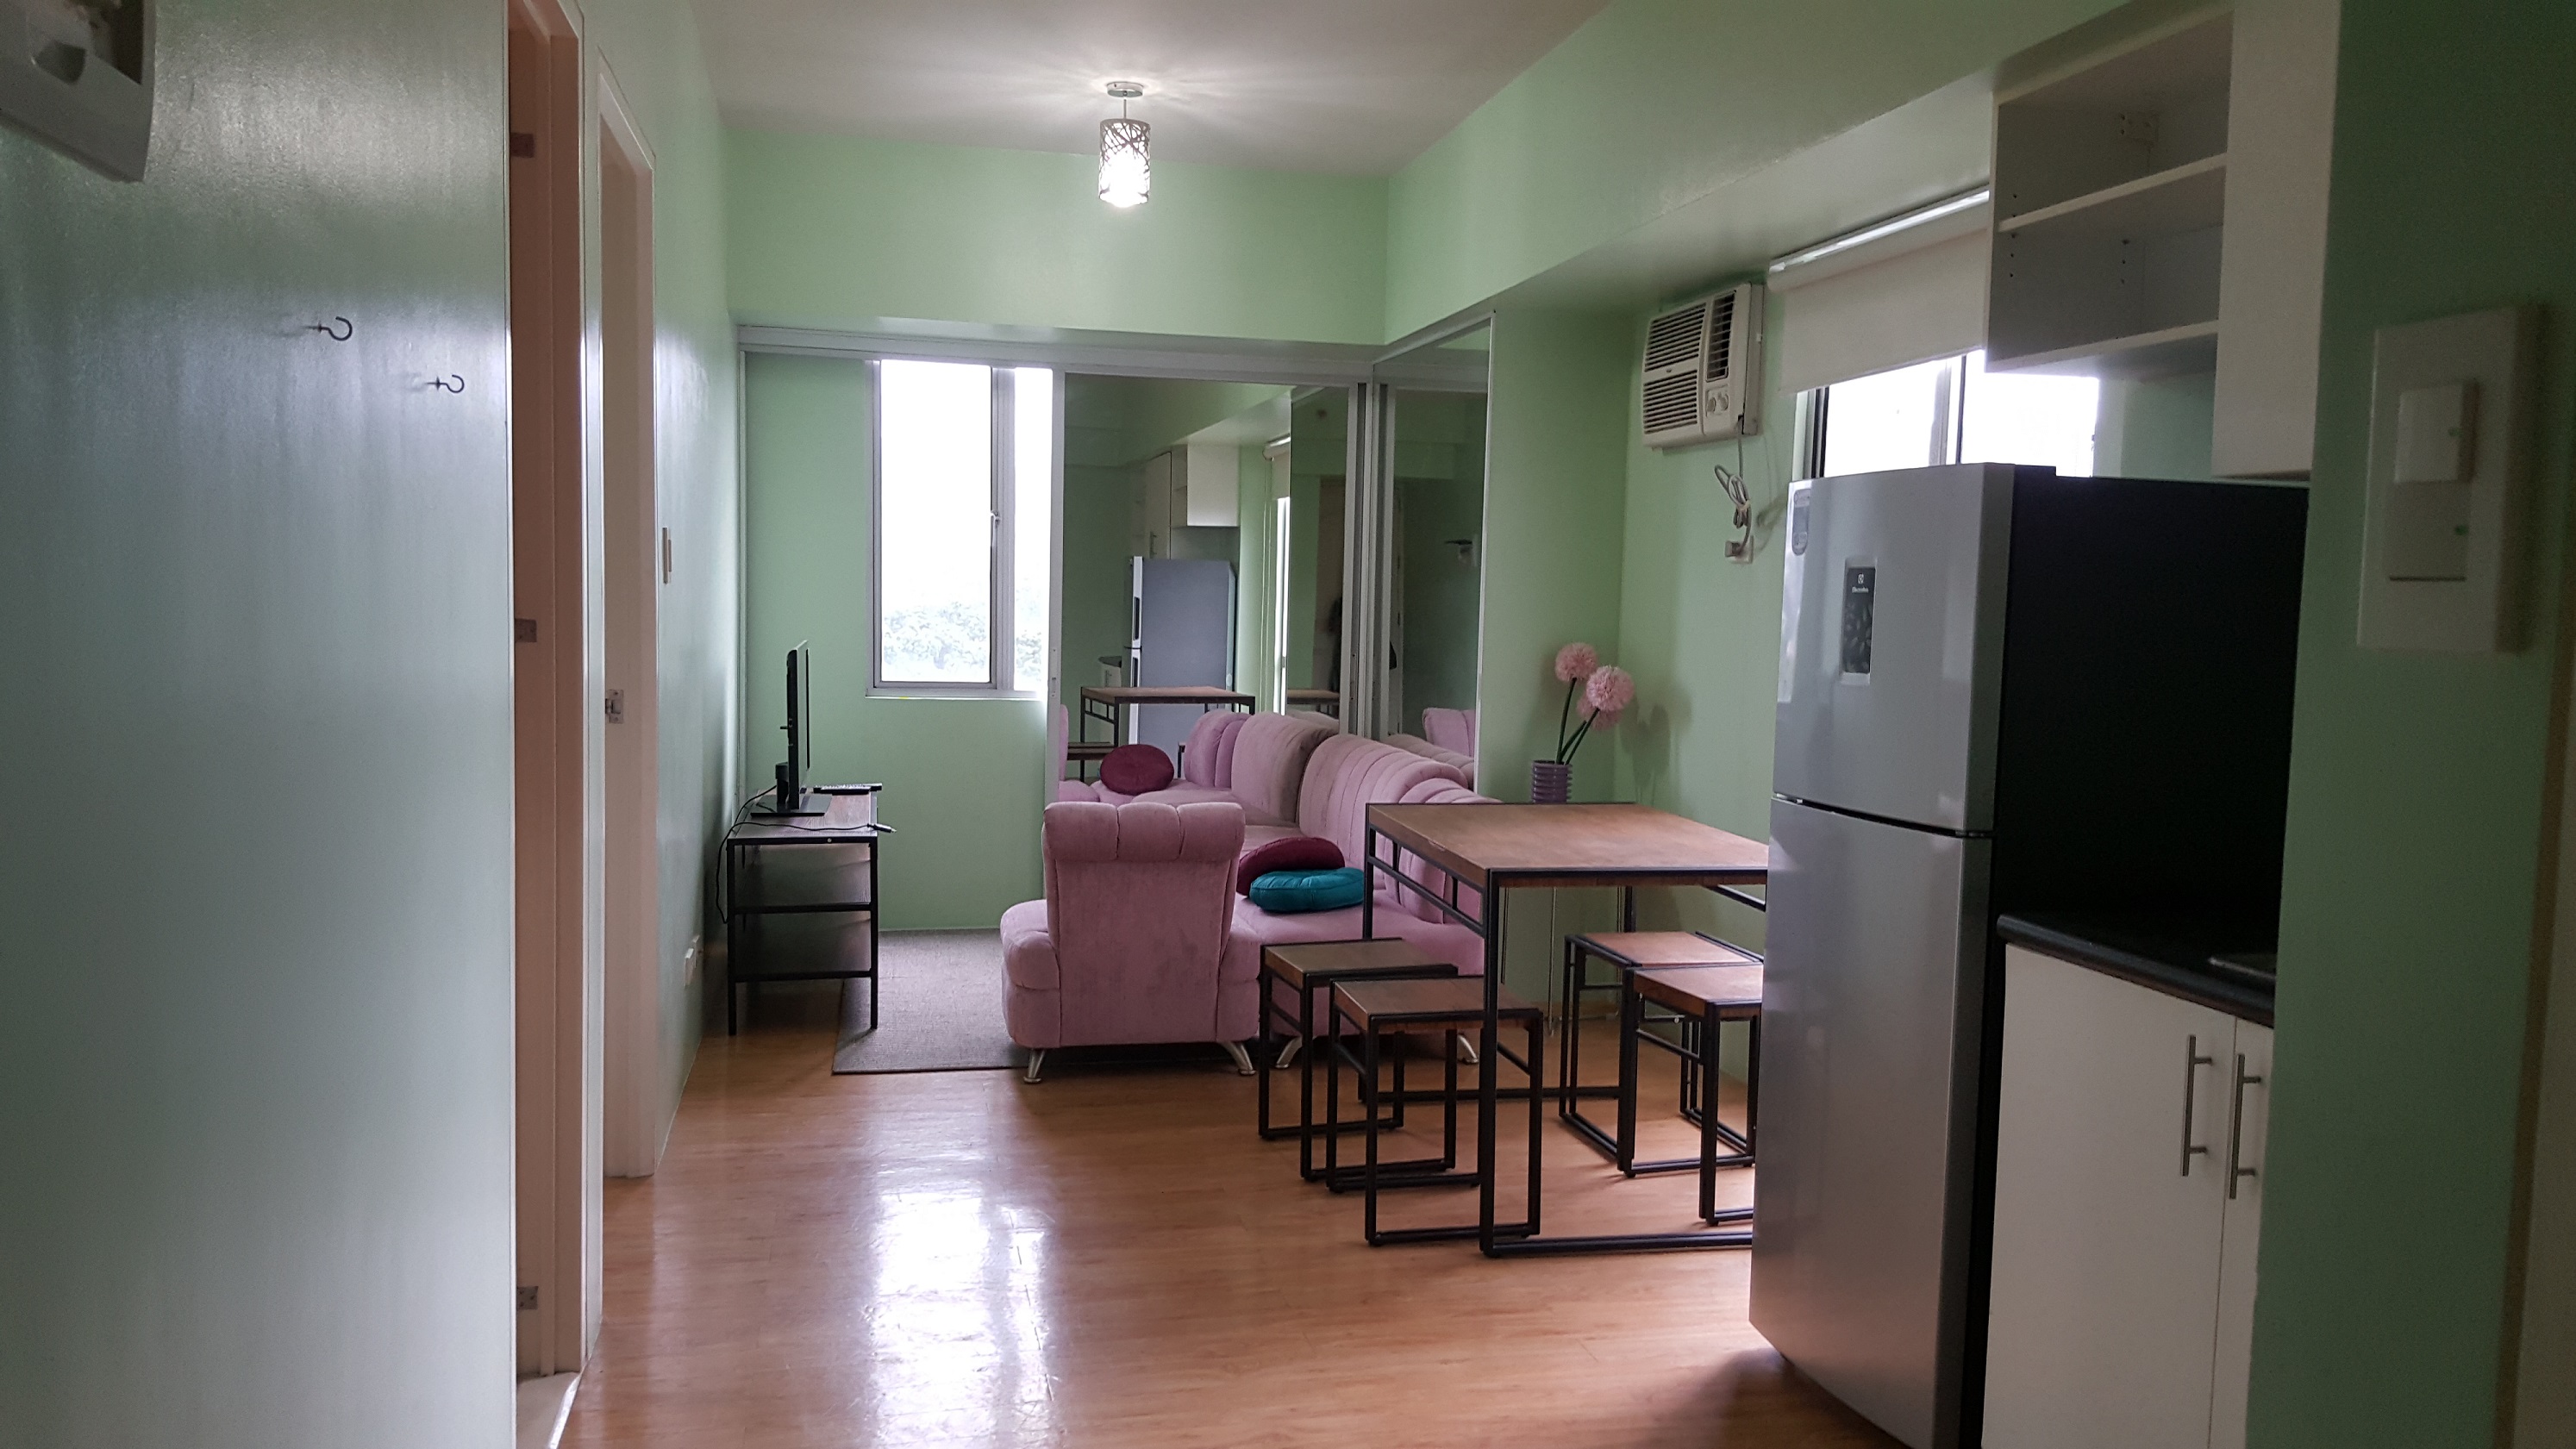 1-bedroom-condominium-furnished-located-in-avida-tower-lahug-cebu-city